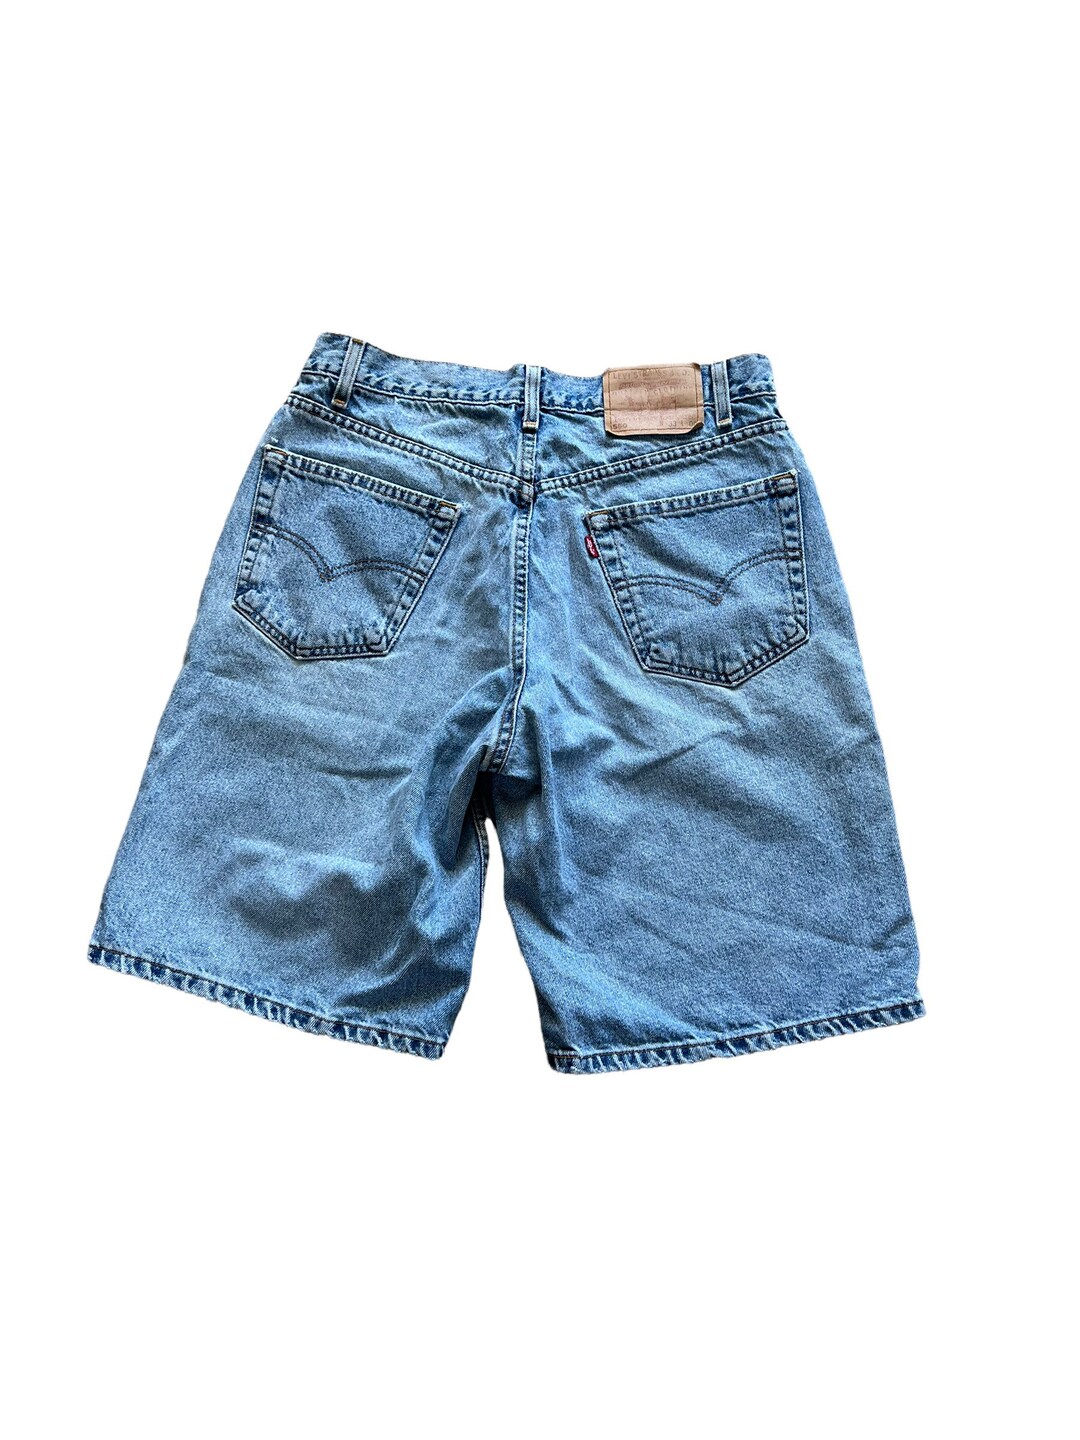 1990s LEVIS Red Tab 550 Vintage Denim Shorts // Size 33 - Etsy